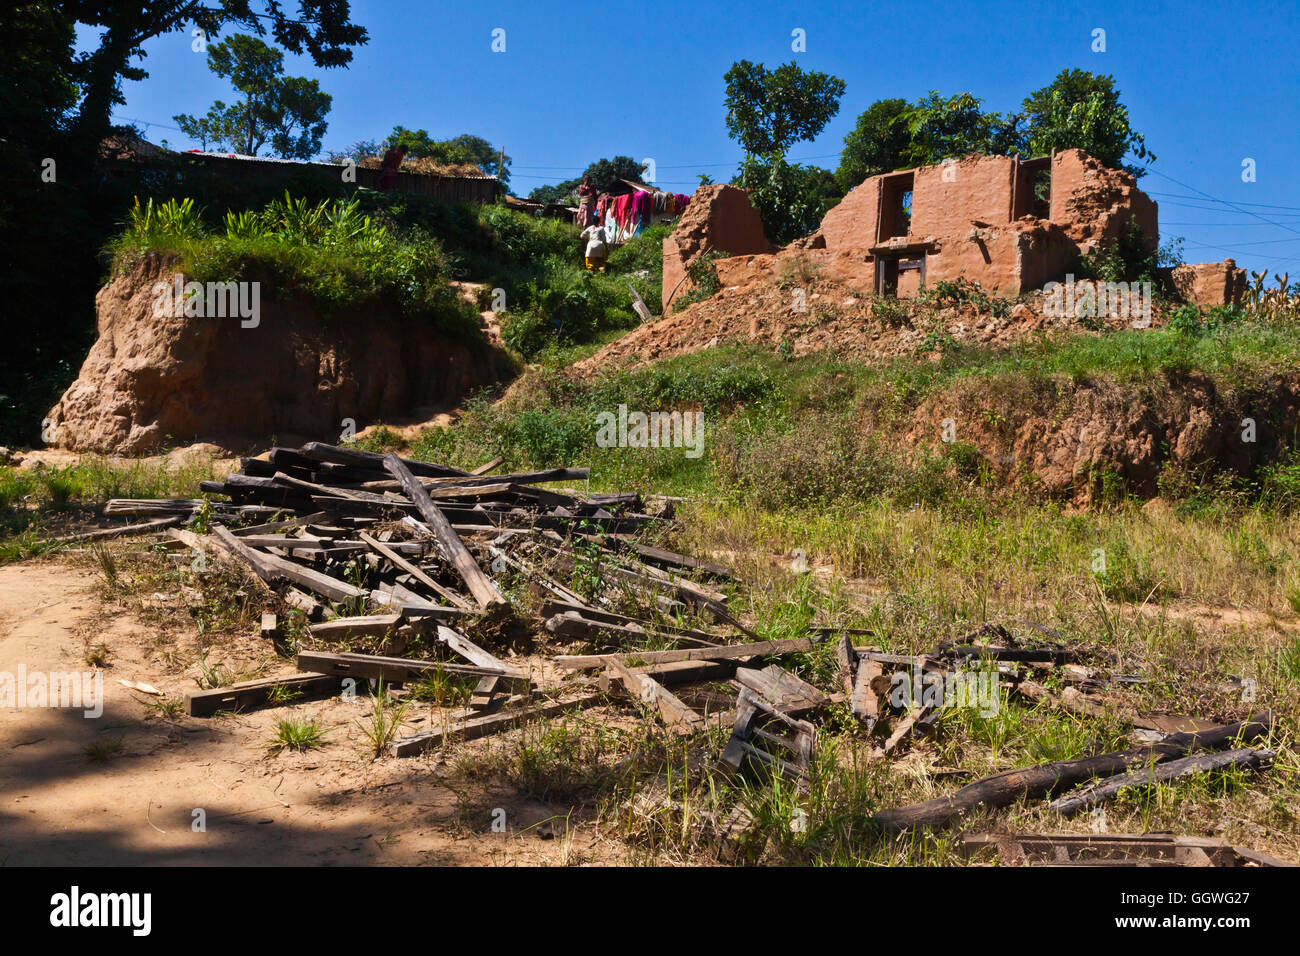 A house with earthquake damage in GOGANPANI VILLAGE - NEPAL Stock Photo